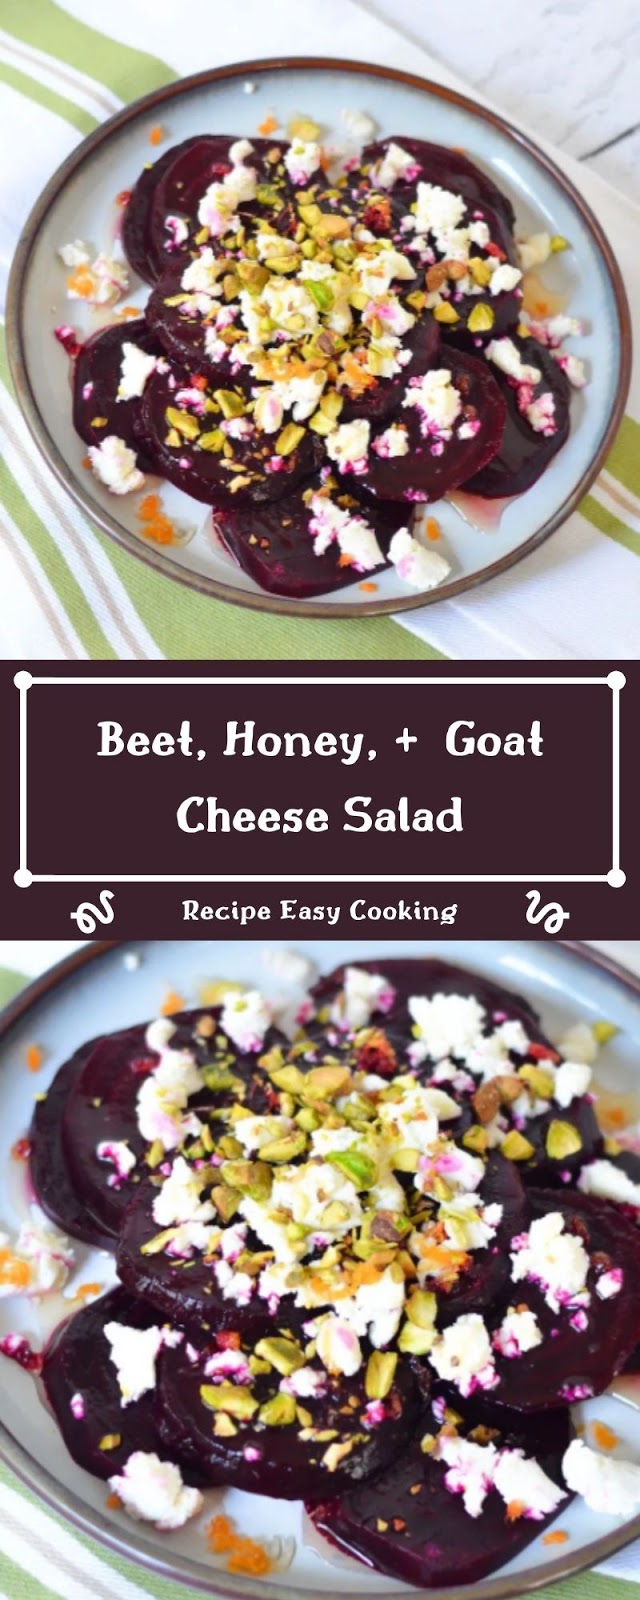 Beet, Honey, + Goat Cheese Salad